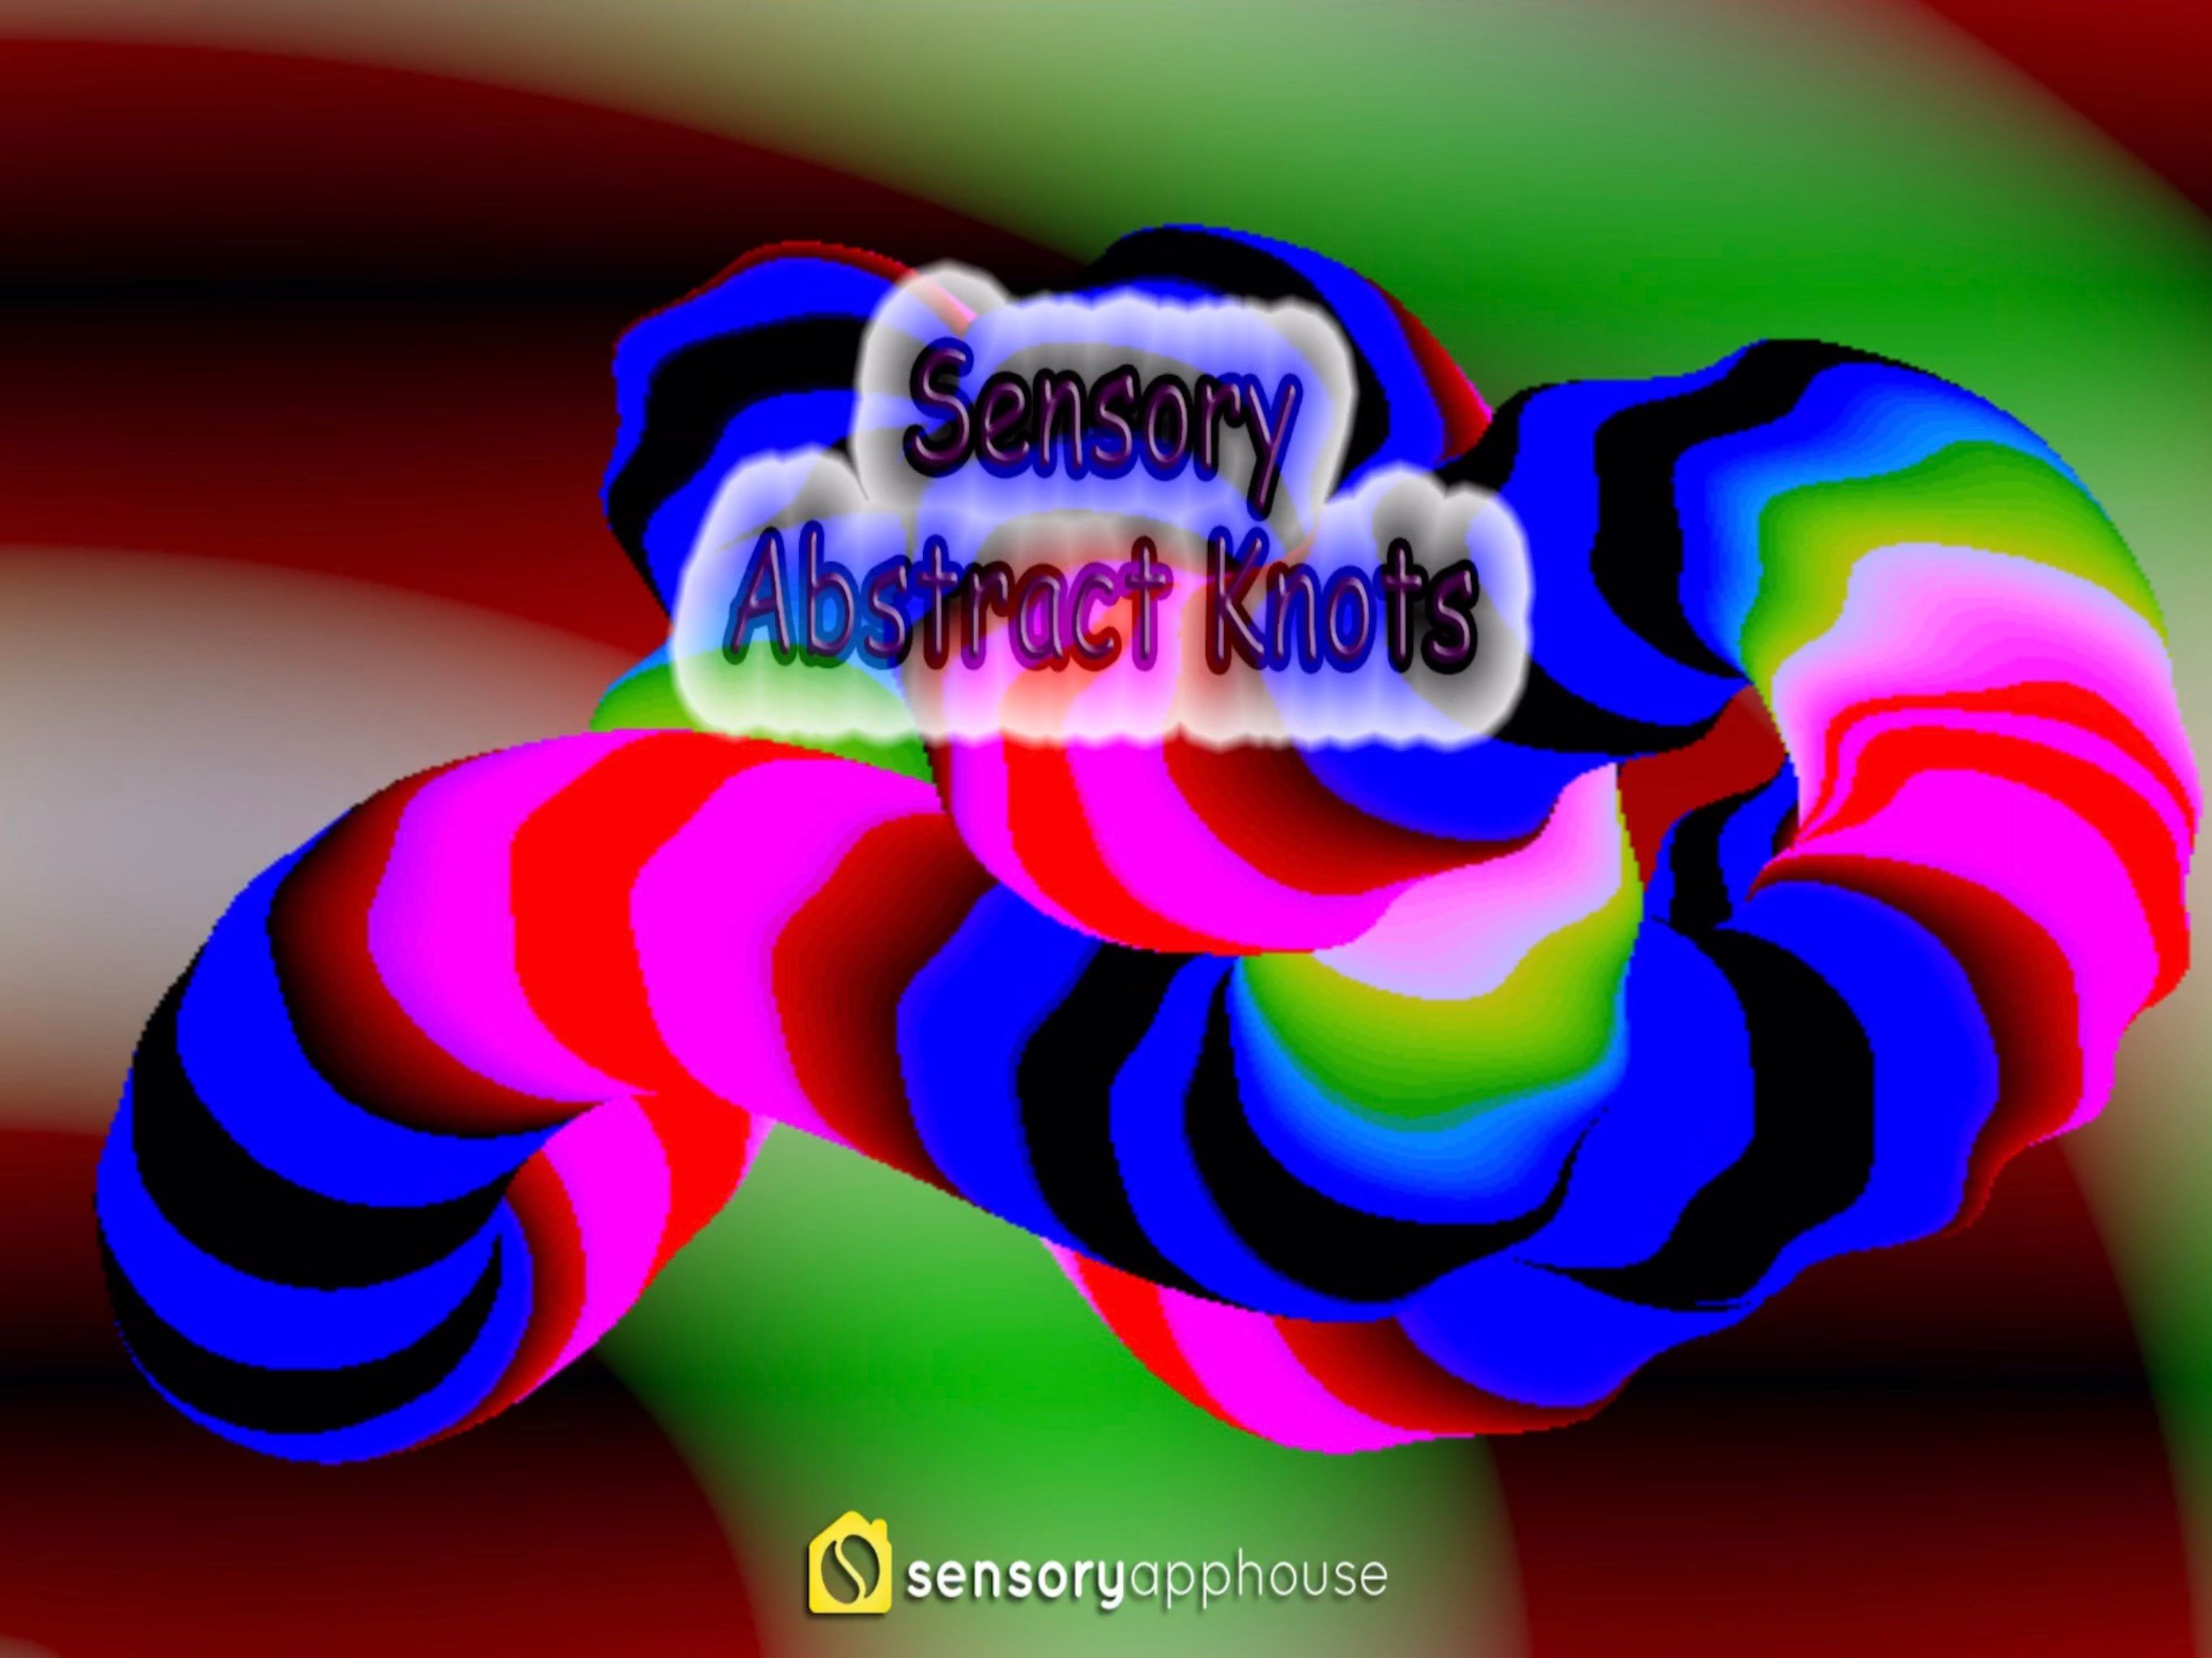 Sensory Abstract Knots visual effects